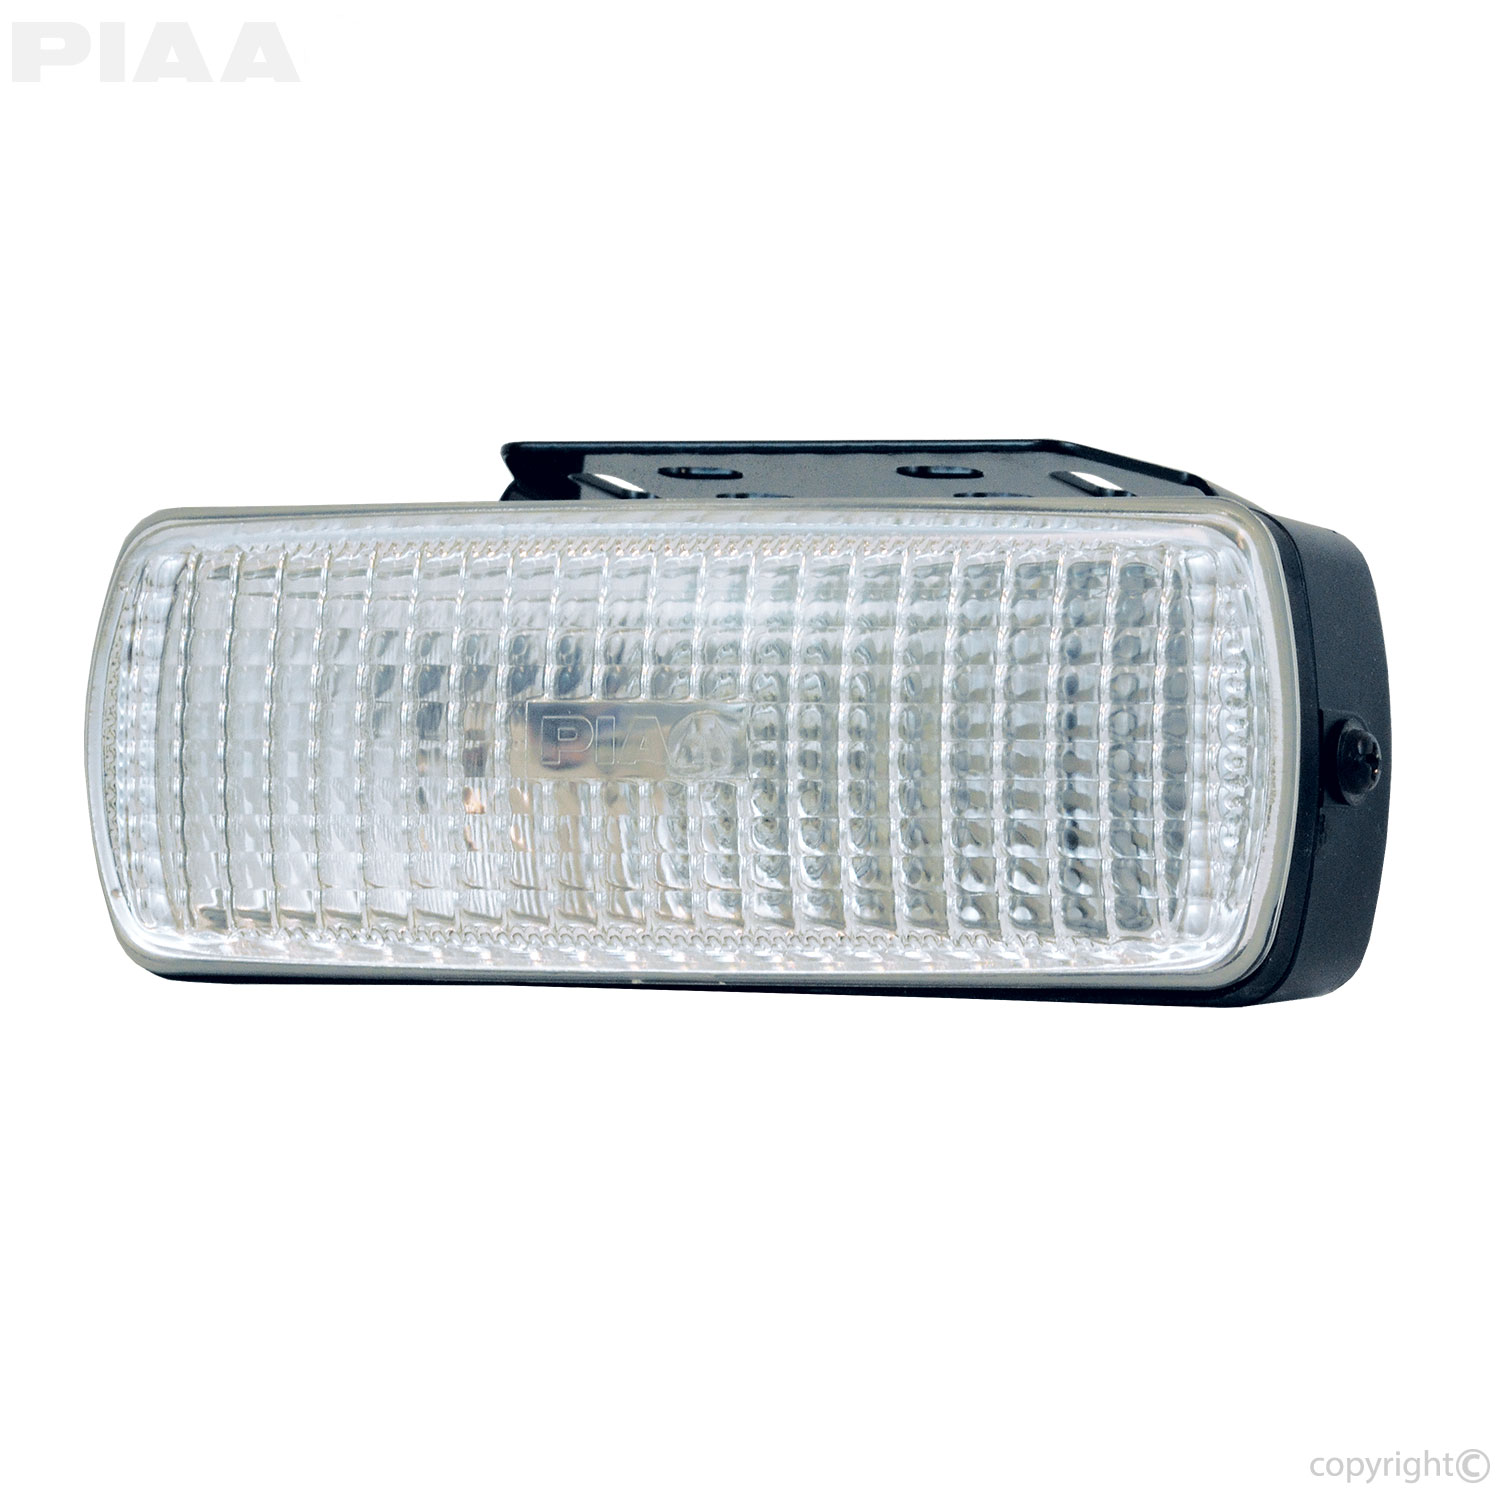 PIAA 1500 Backup Light